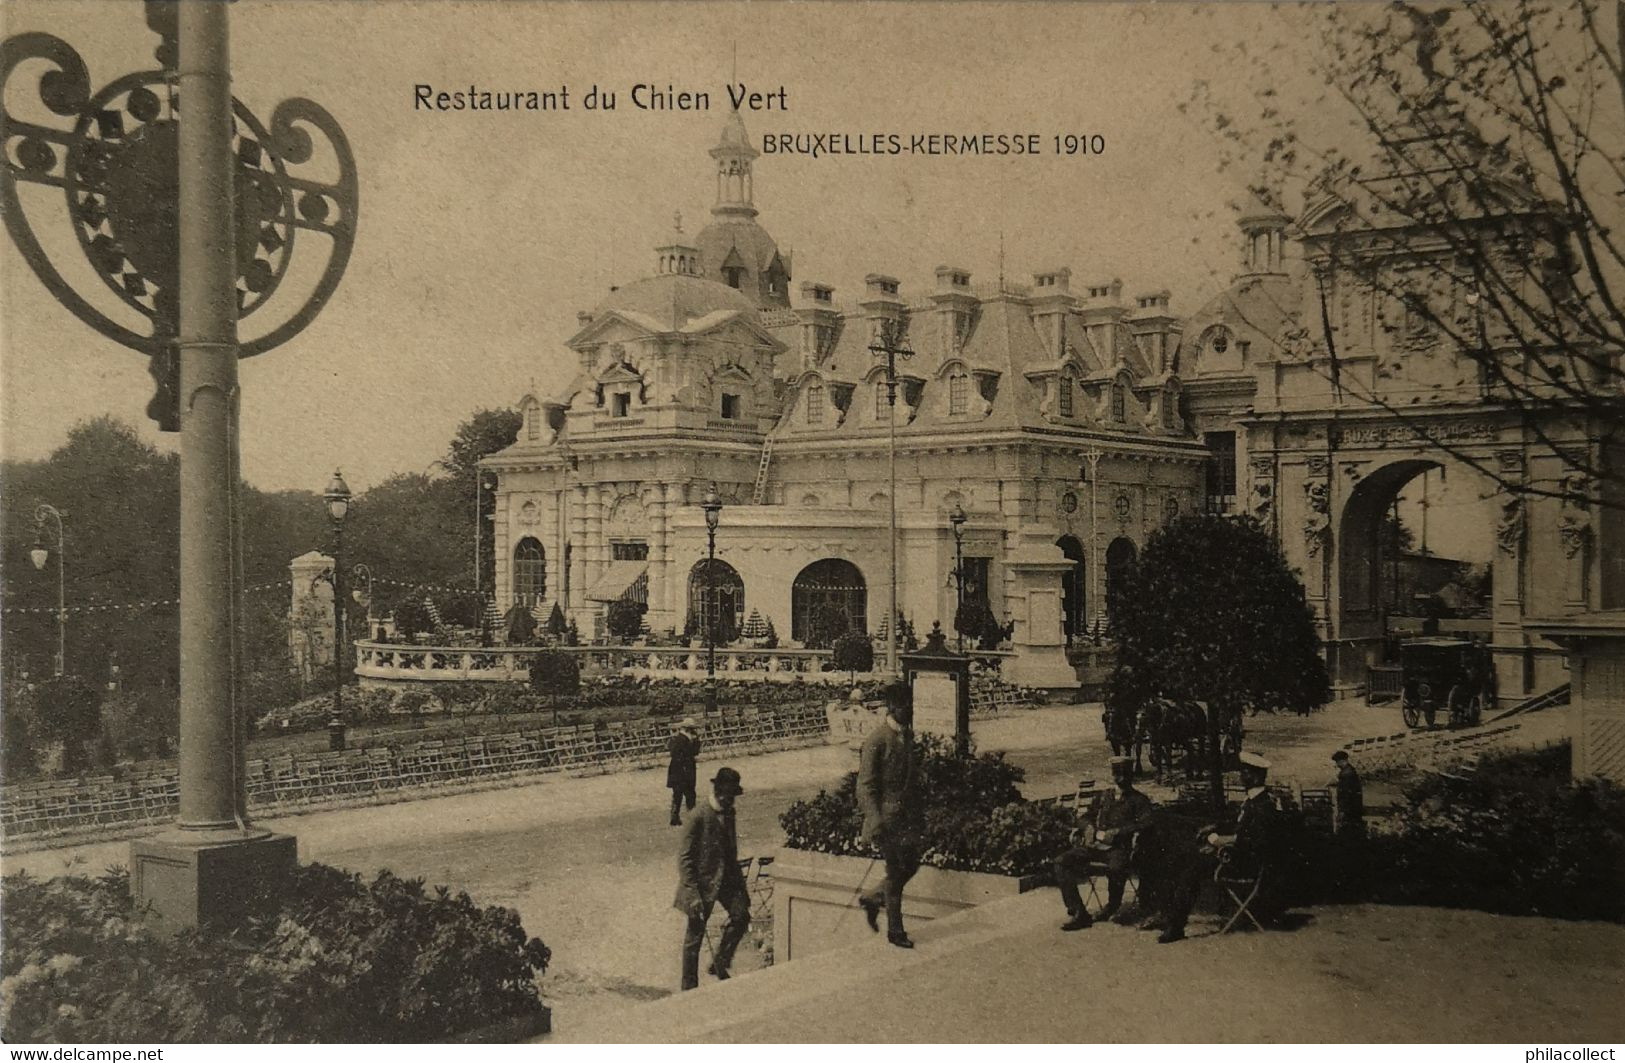 Bruxelles - Kermesse 1910 // Restaurant Du Chien Vert 19?? - Weltausstellungen